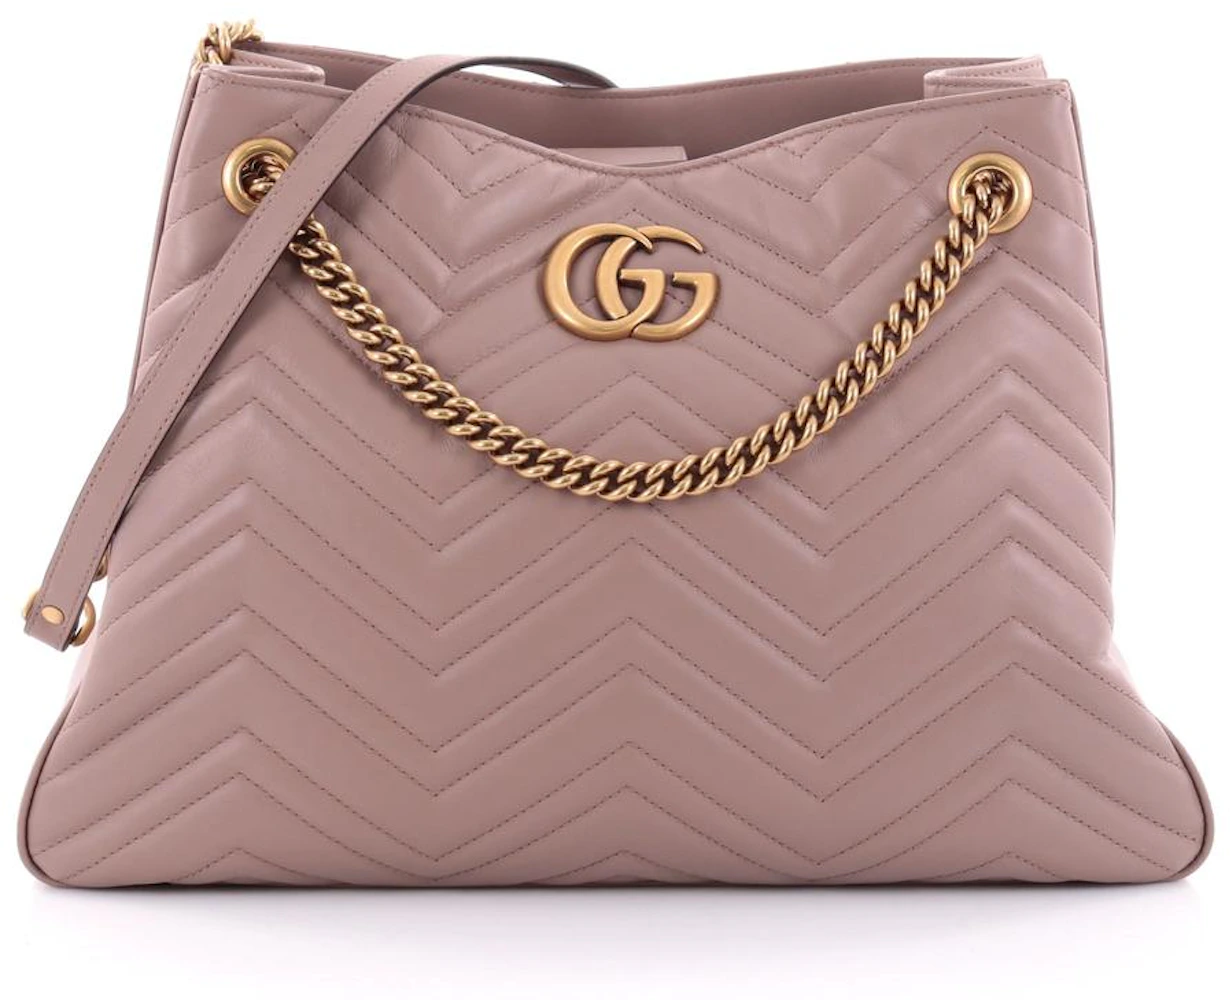 Gucci GG Marmont Matelassé Chevron Leather Shoulder Bag in Brown